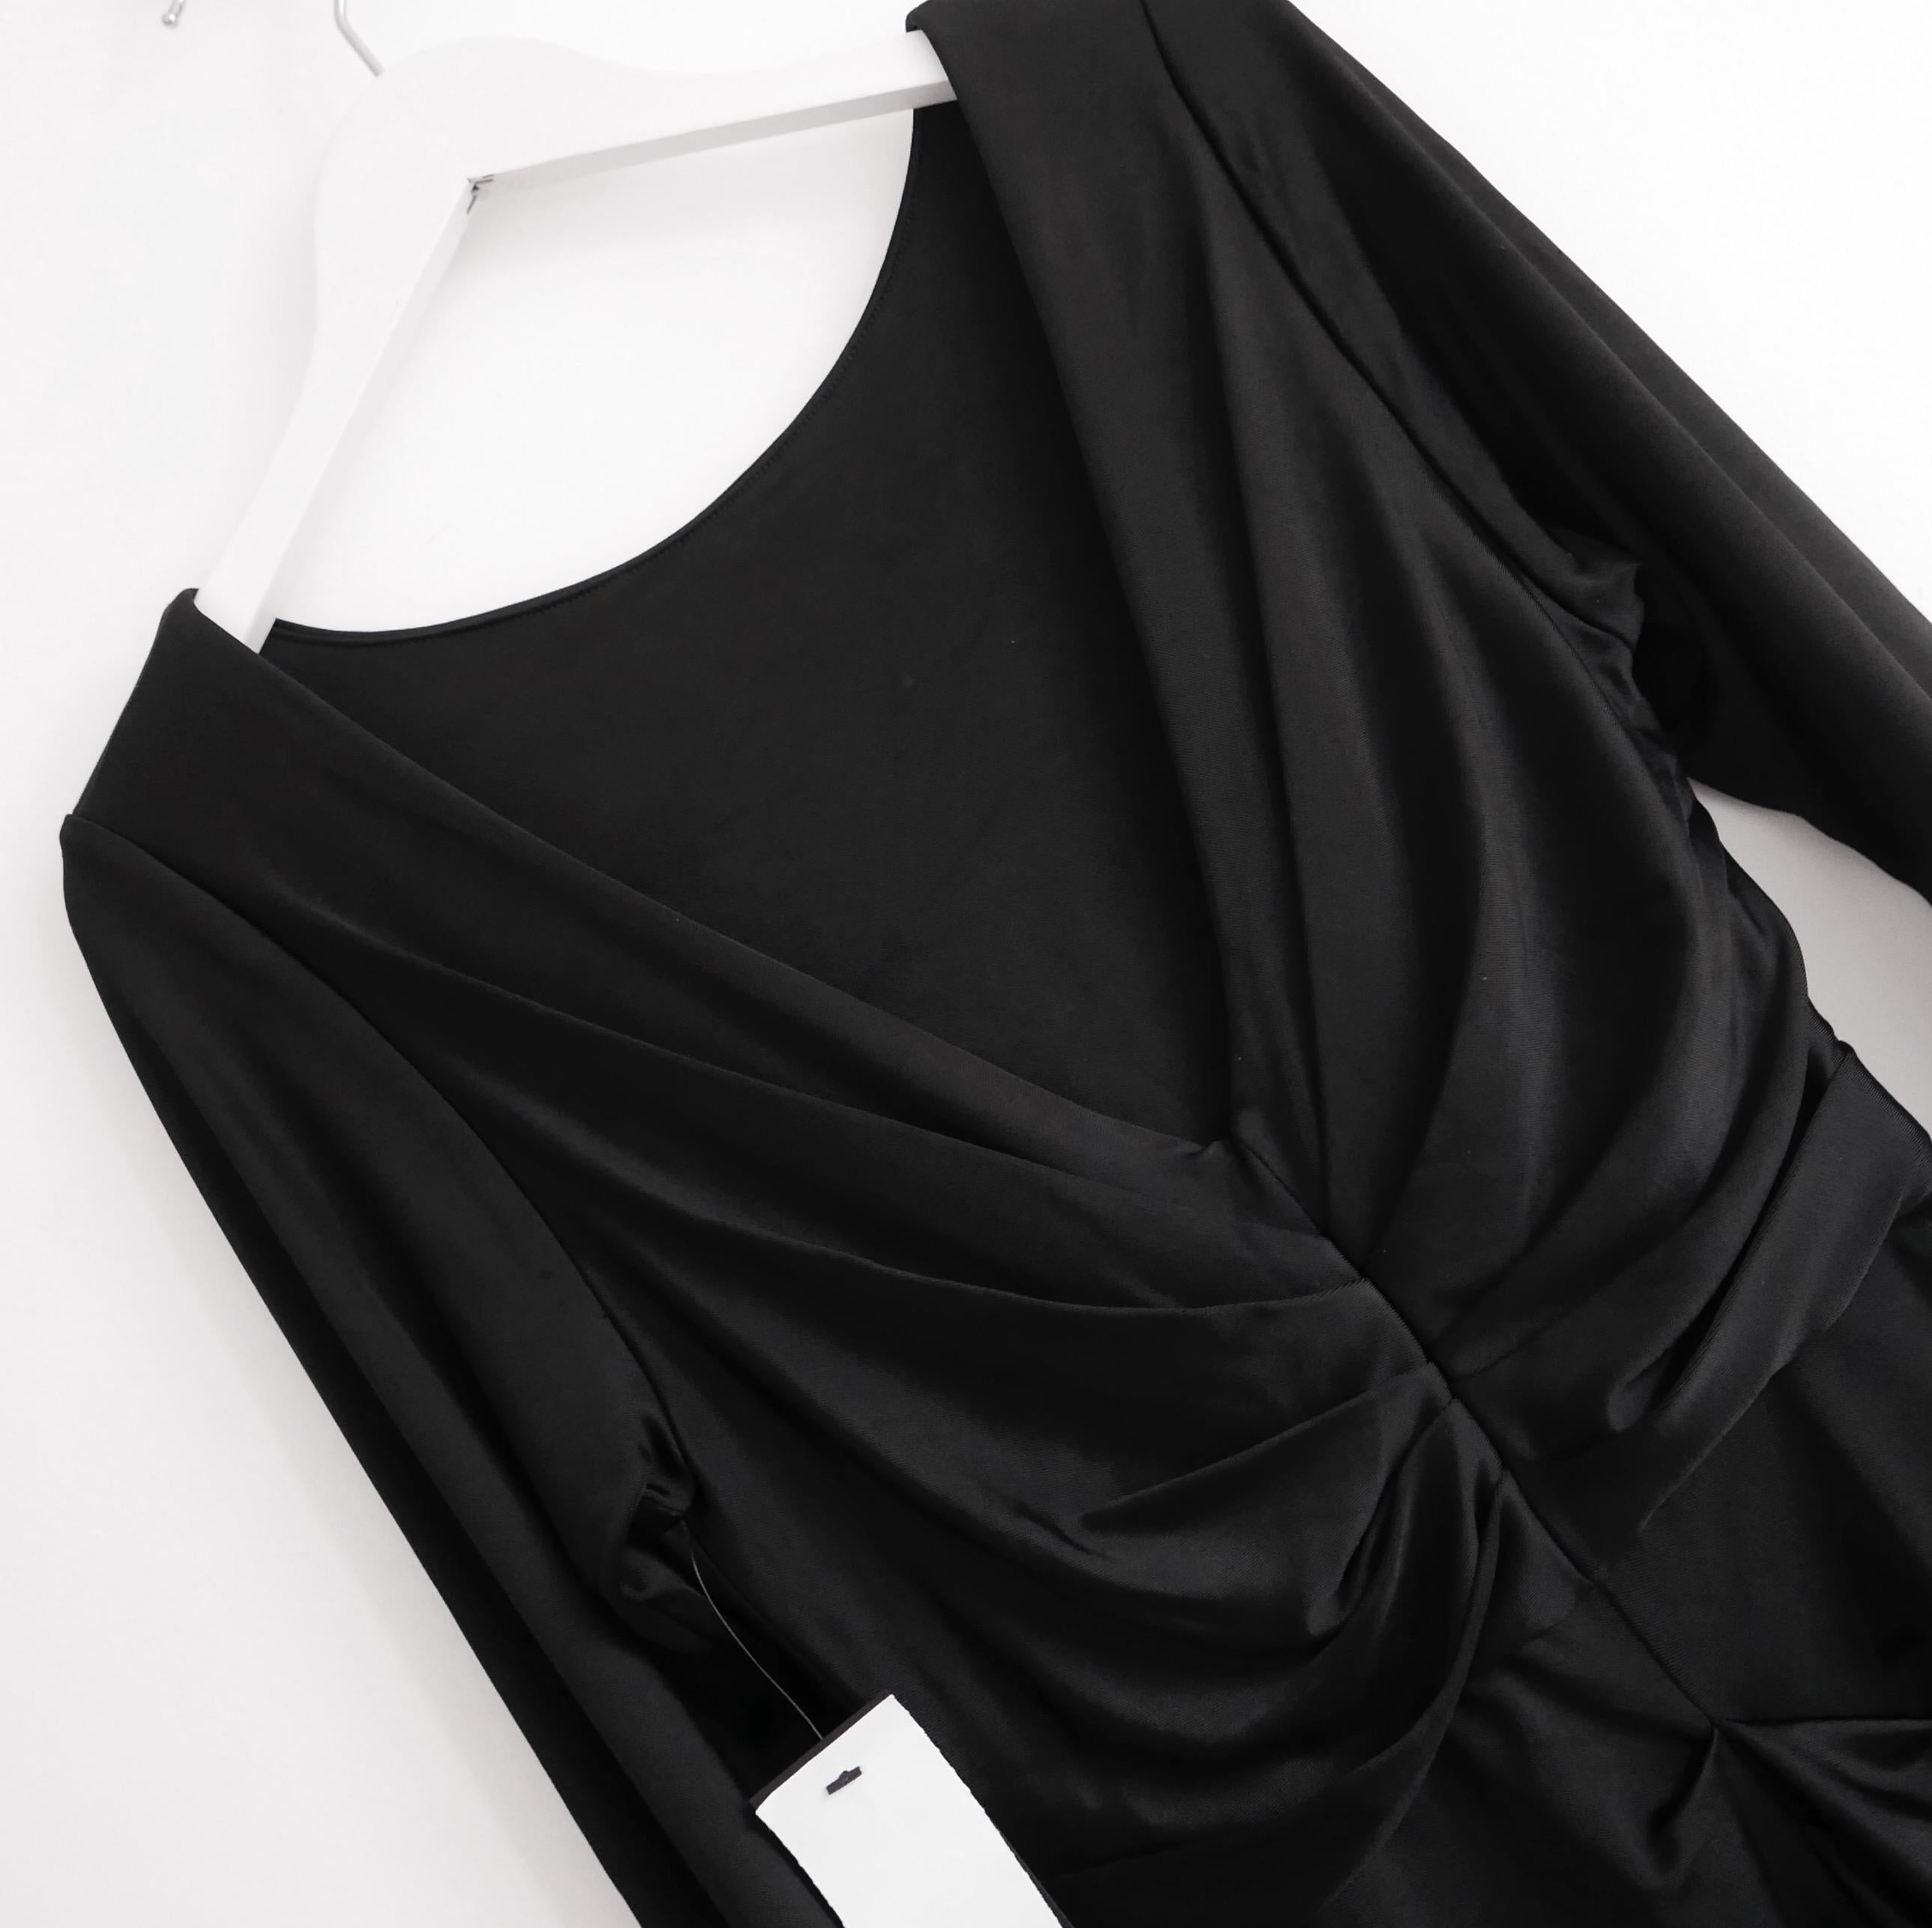 Dries Van Noten black draped jersey dress For Sale 1